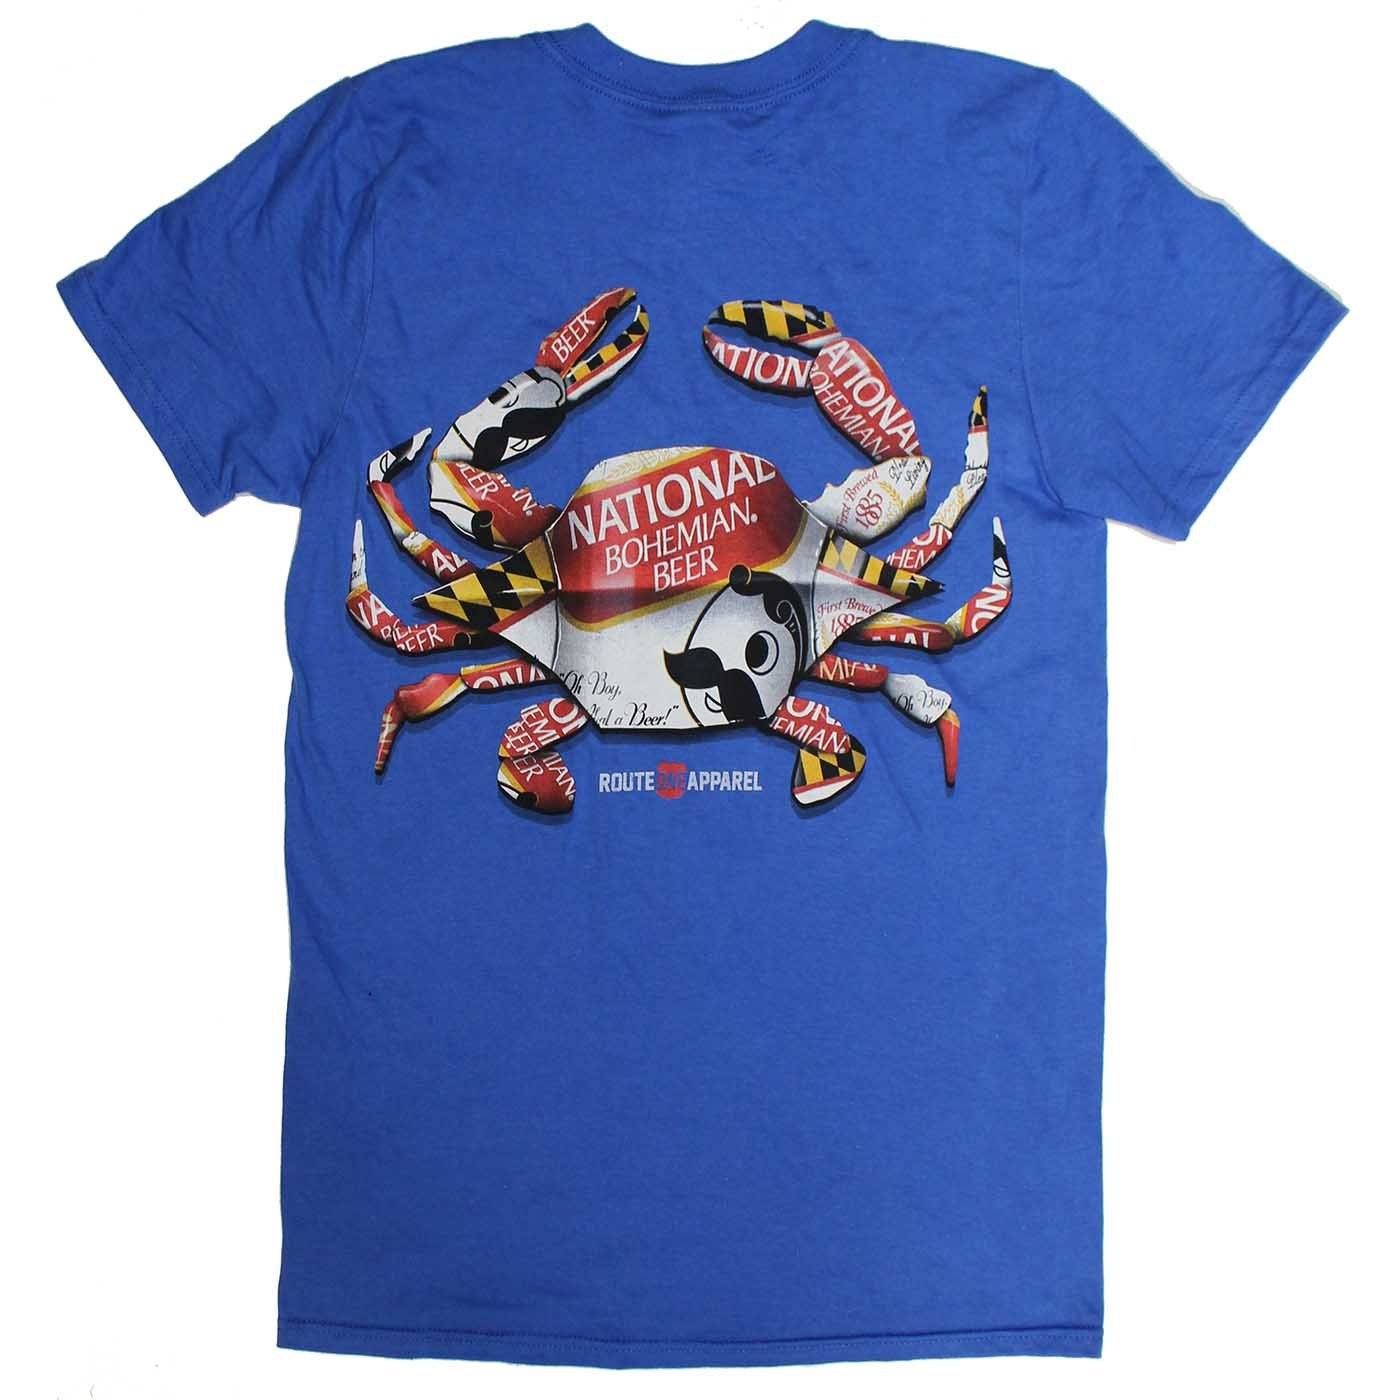 Natty Boh Can Crab (Royal) / Shirt - Route One Apparel